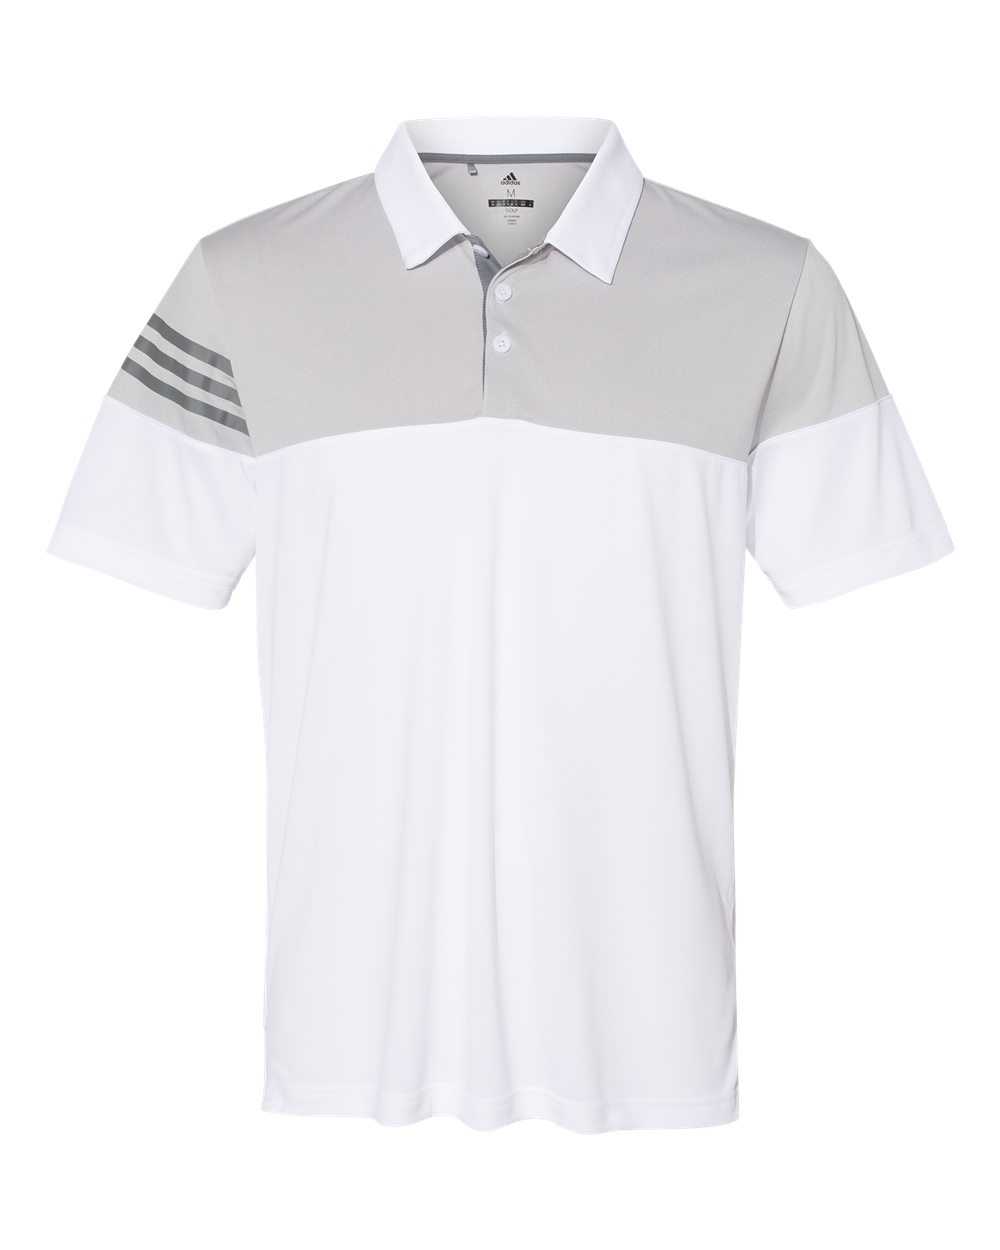 Adidas A213 Heathered 3-Stripes Block Sport Shirt - White Vista Grey - HIT a Double